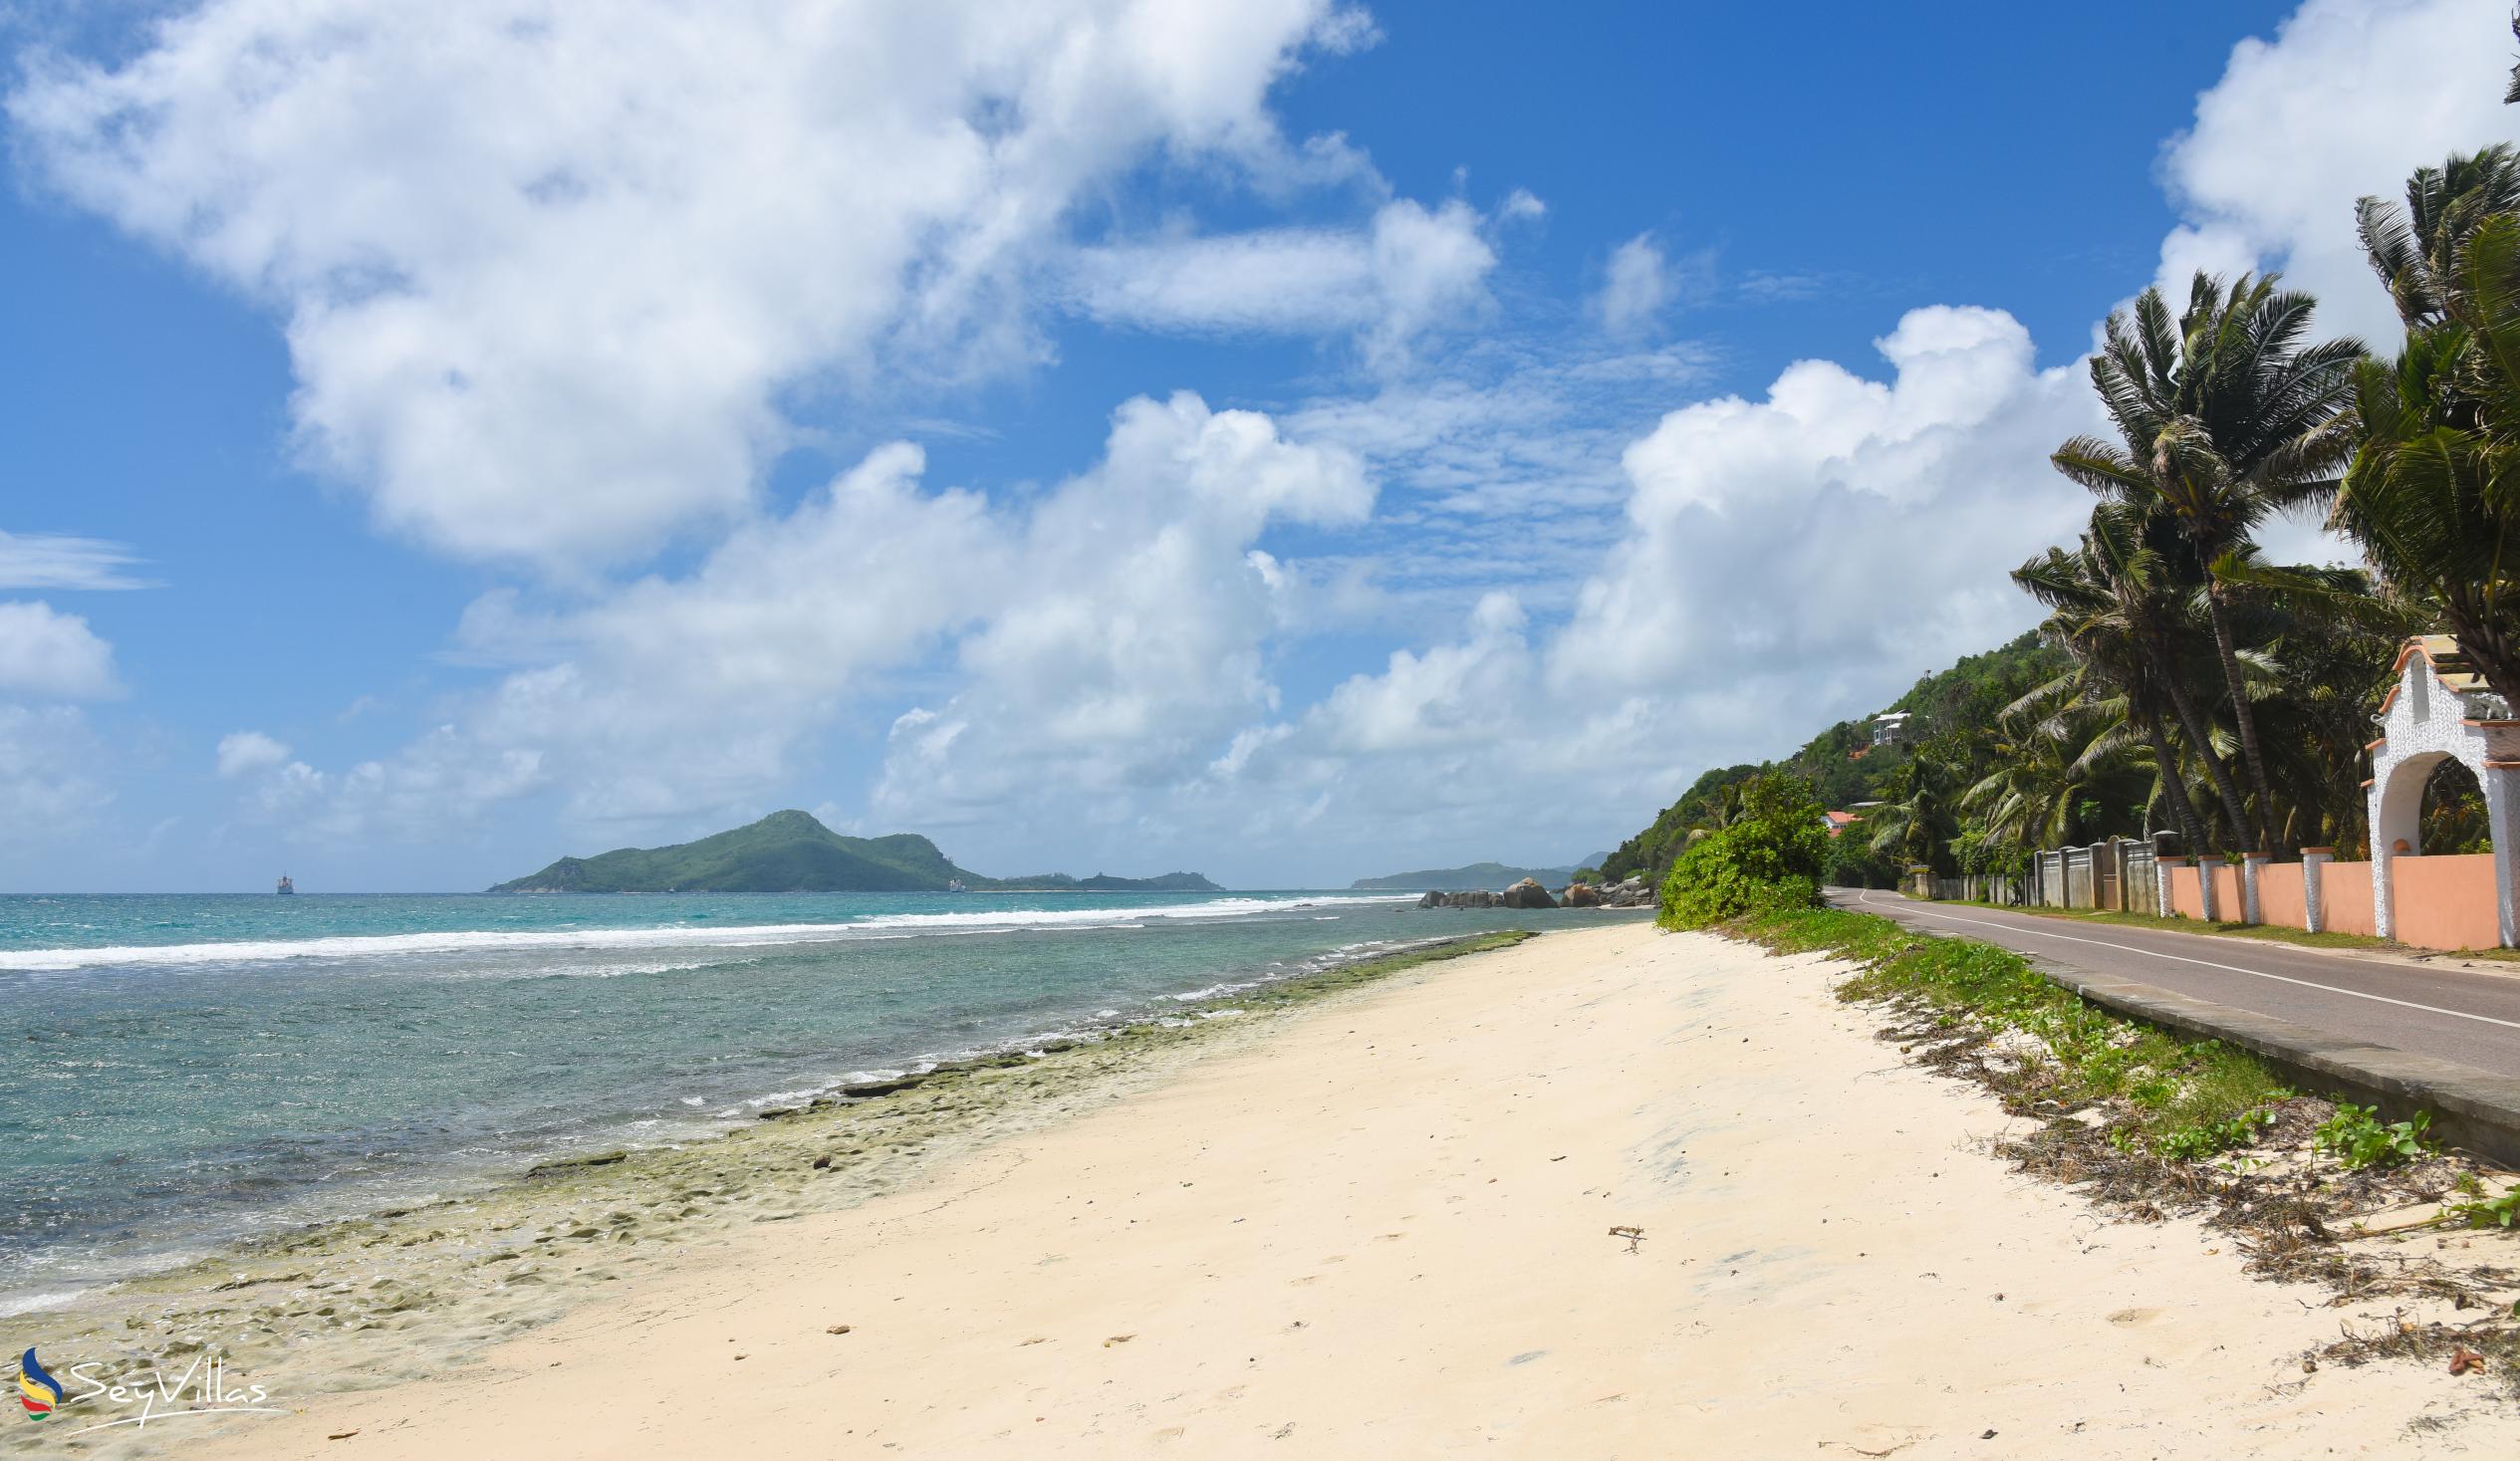 Photo 9: Anse Nord d'Est - Mahé (Seychelles)